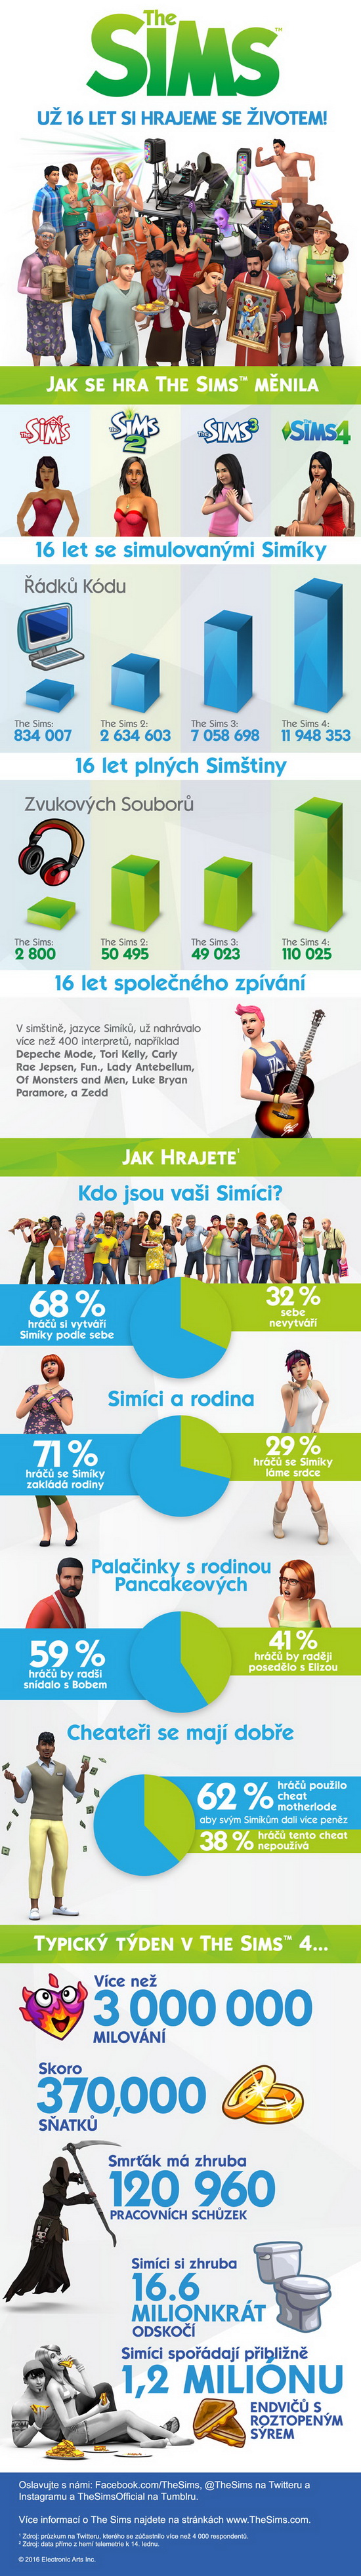 Infografika k 16. výročiu hry The Sims